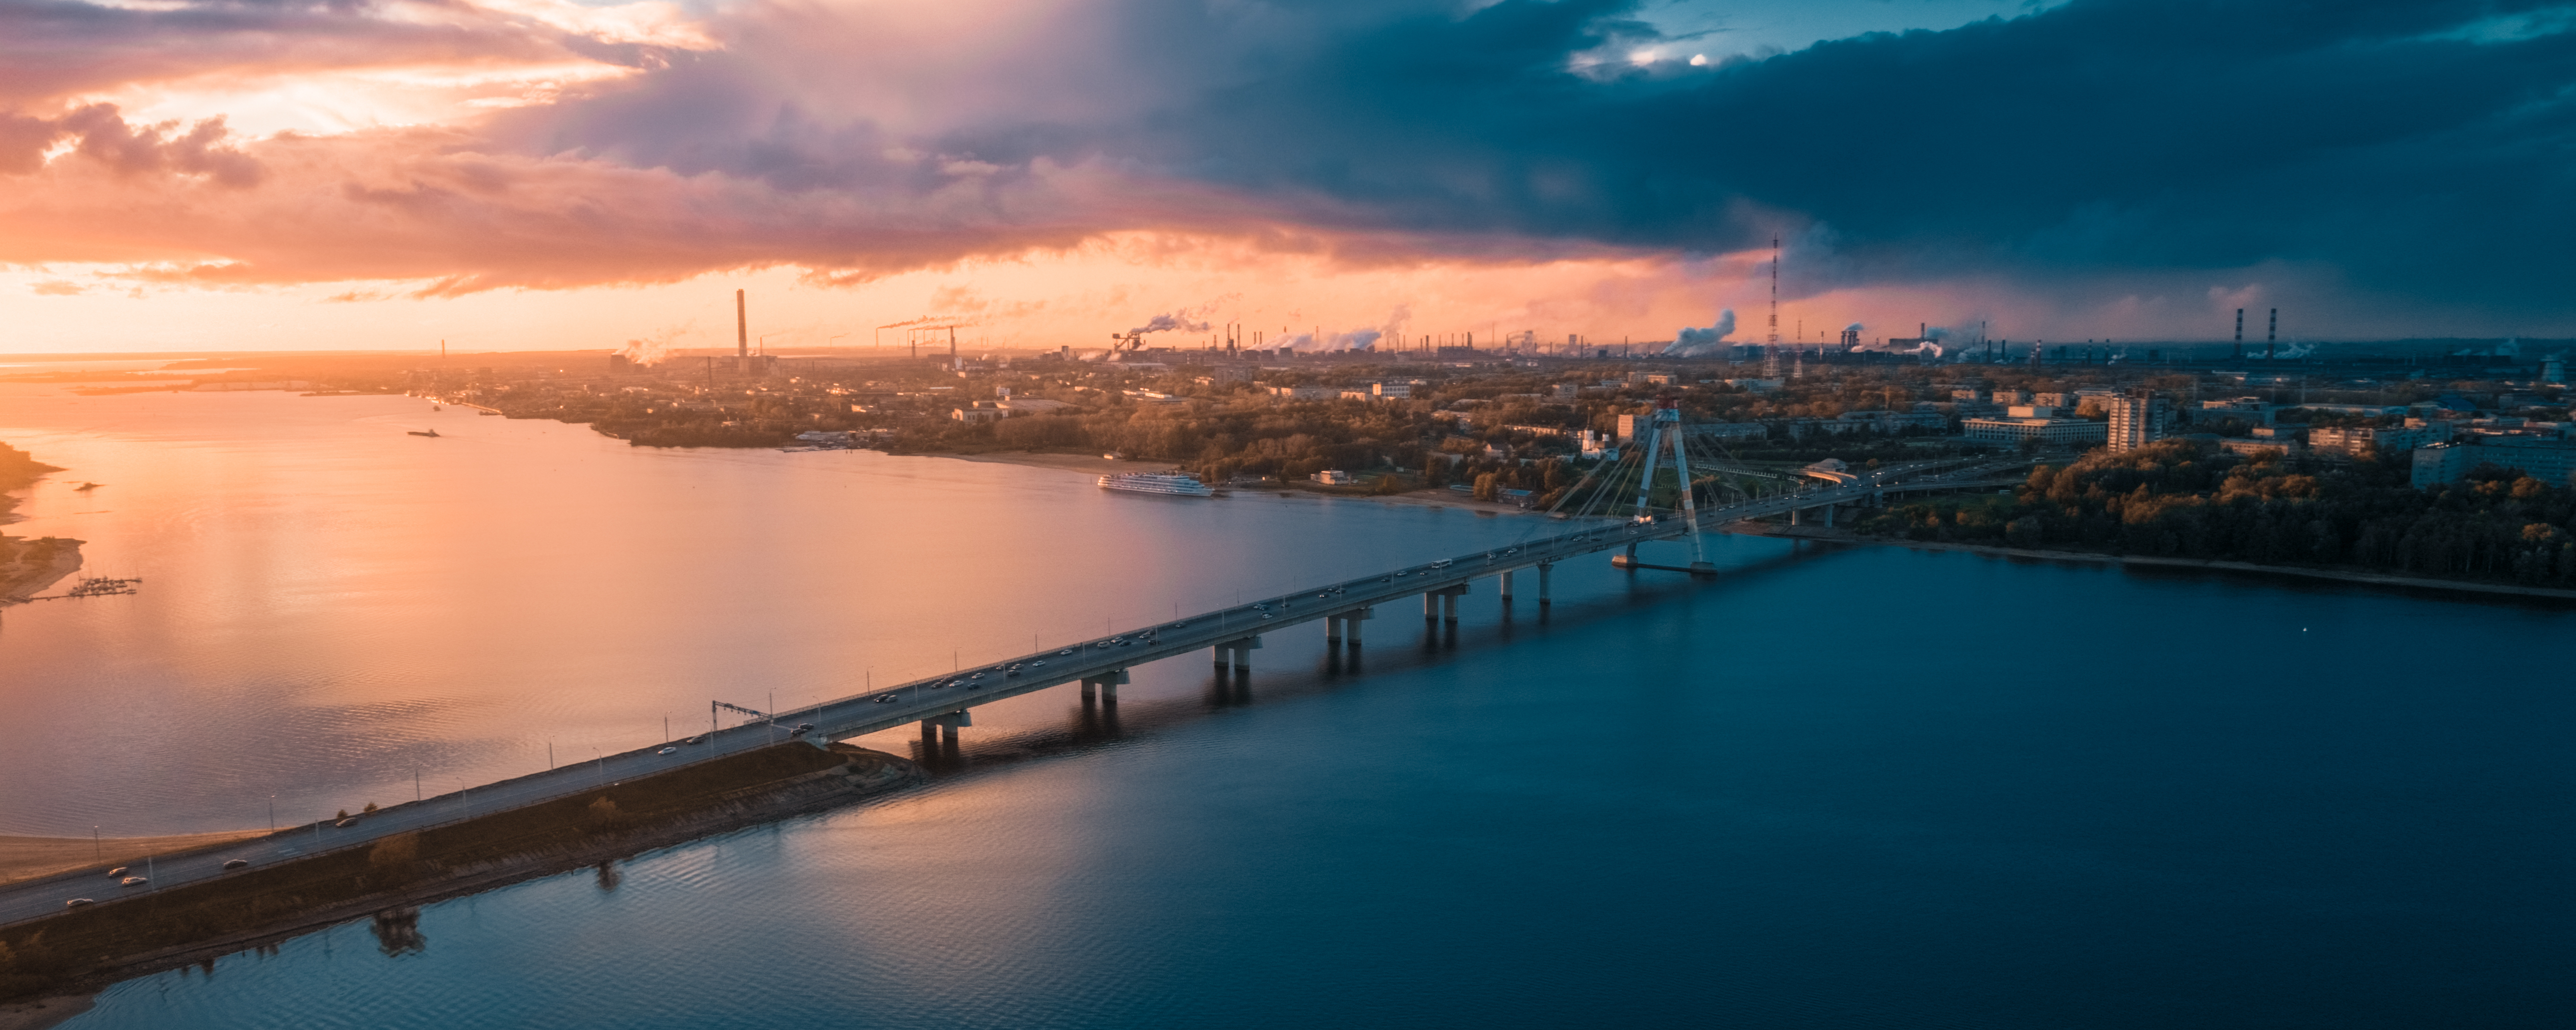 Октябрьский мост Череповец панорама